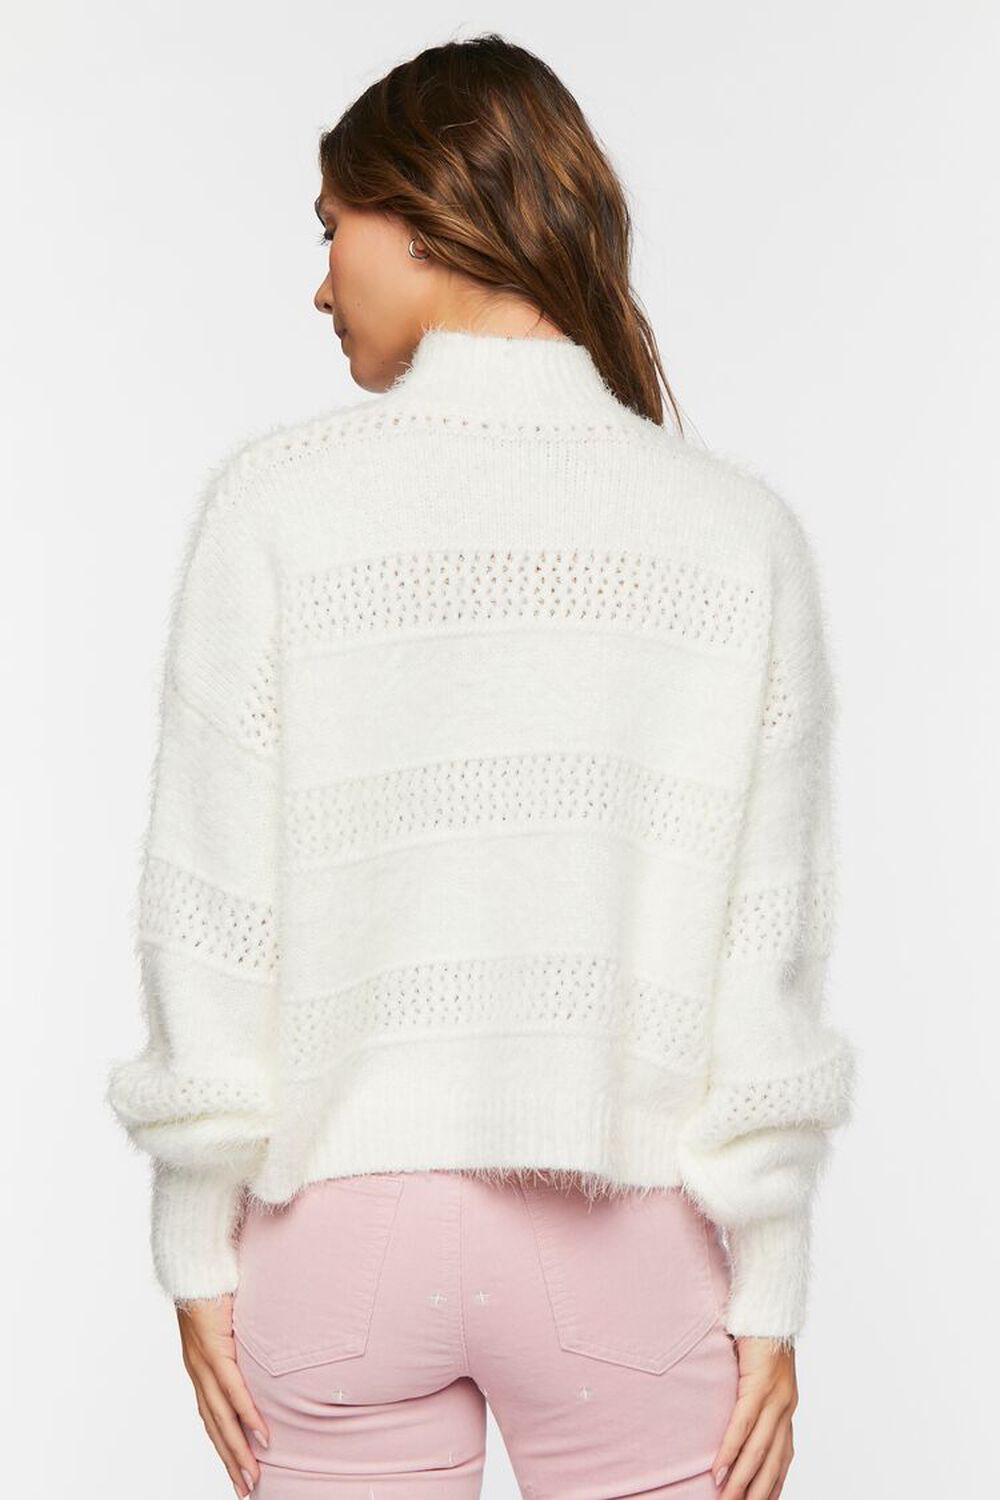 CREAM Fuzzy Contrast-Panel Mock Neck Sweater, image 3